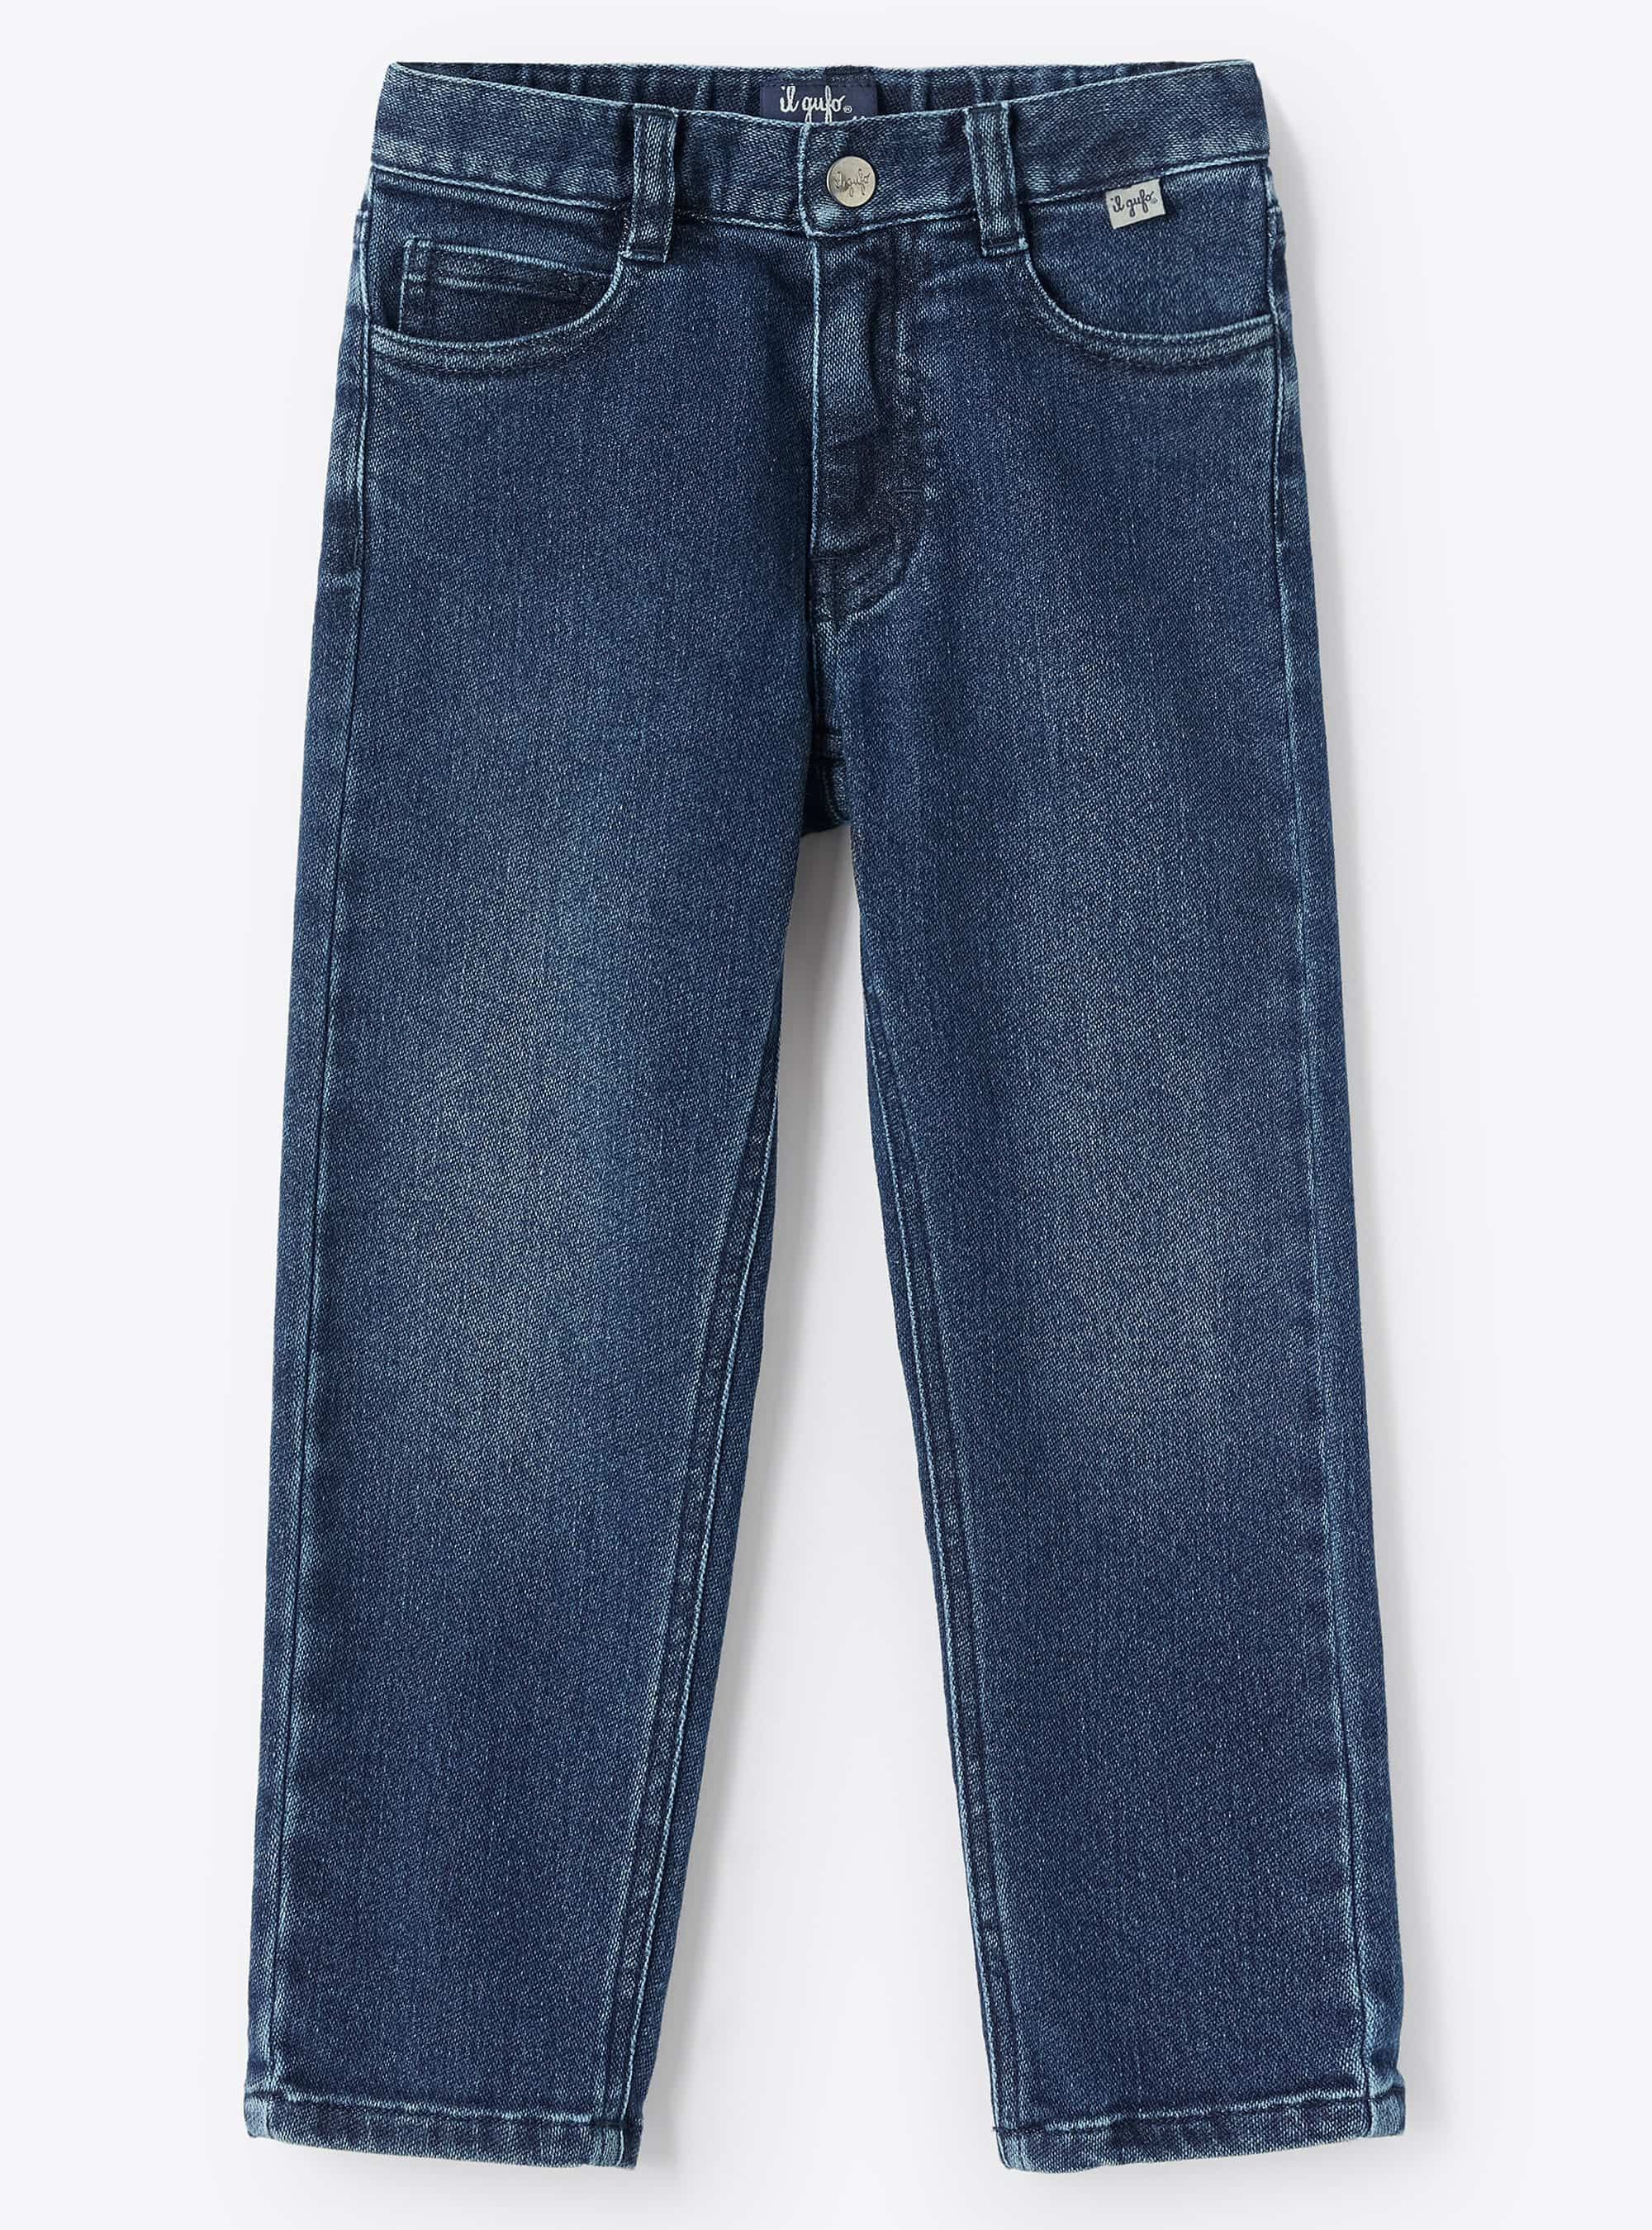 Regular fit 5-pocket jeans in dark blue denim - Trousers - Il Gufo